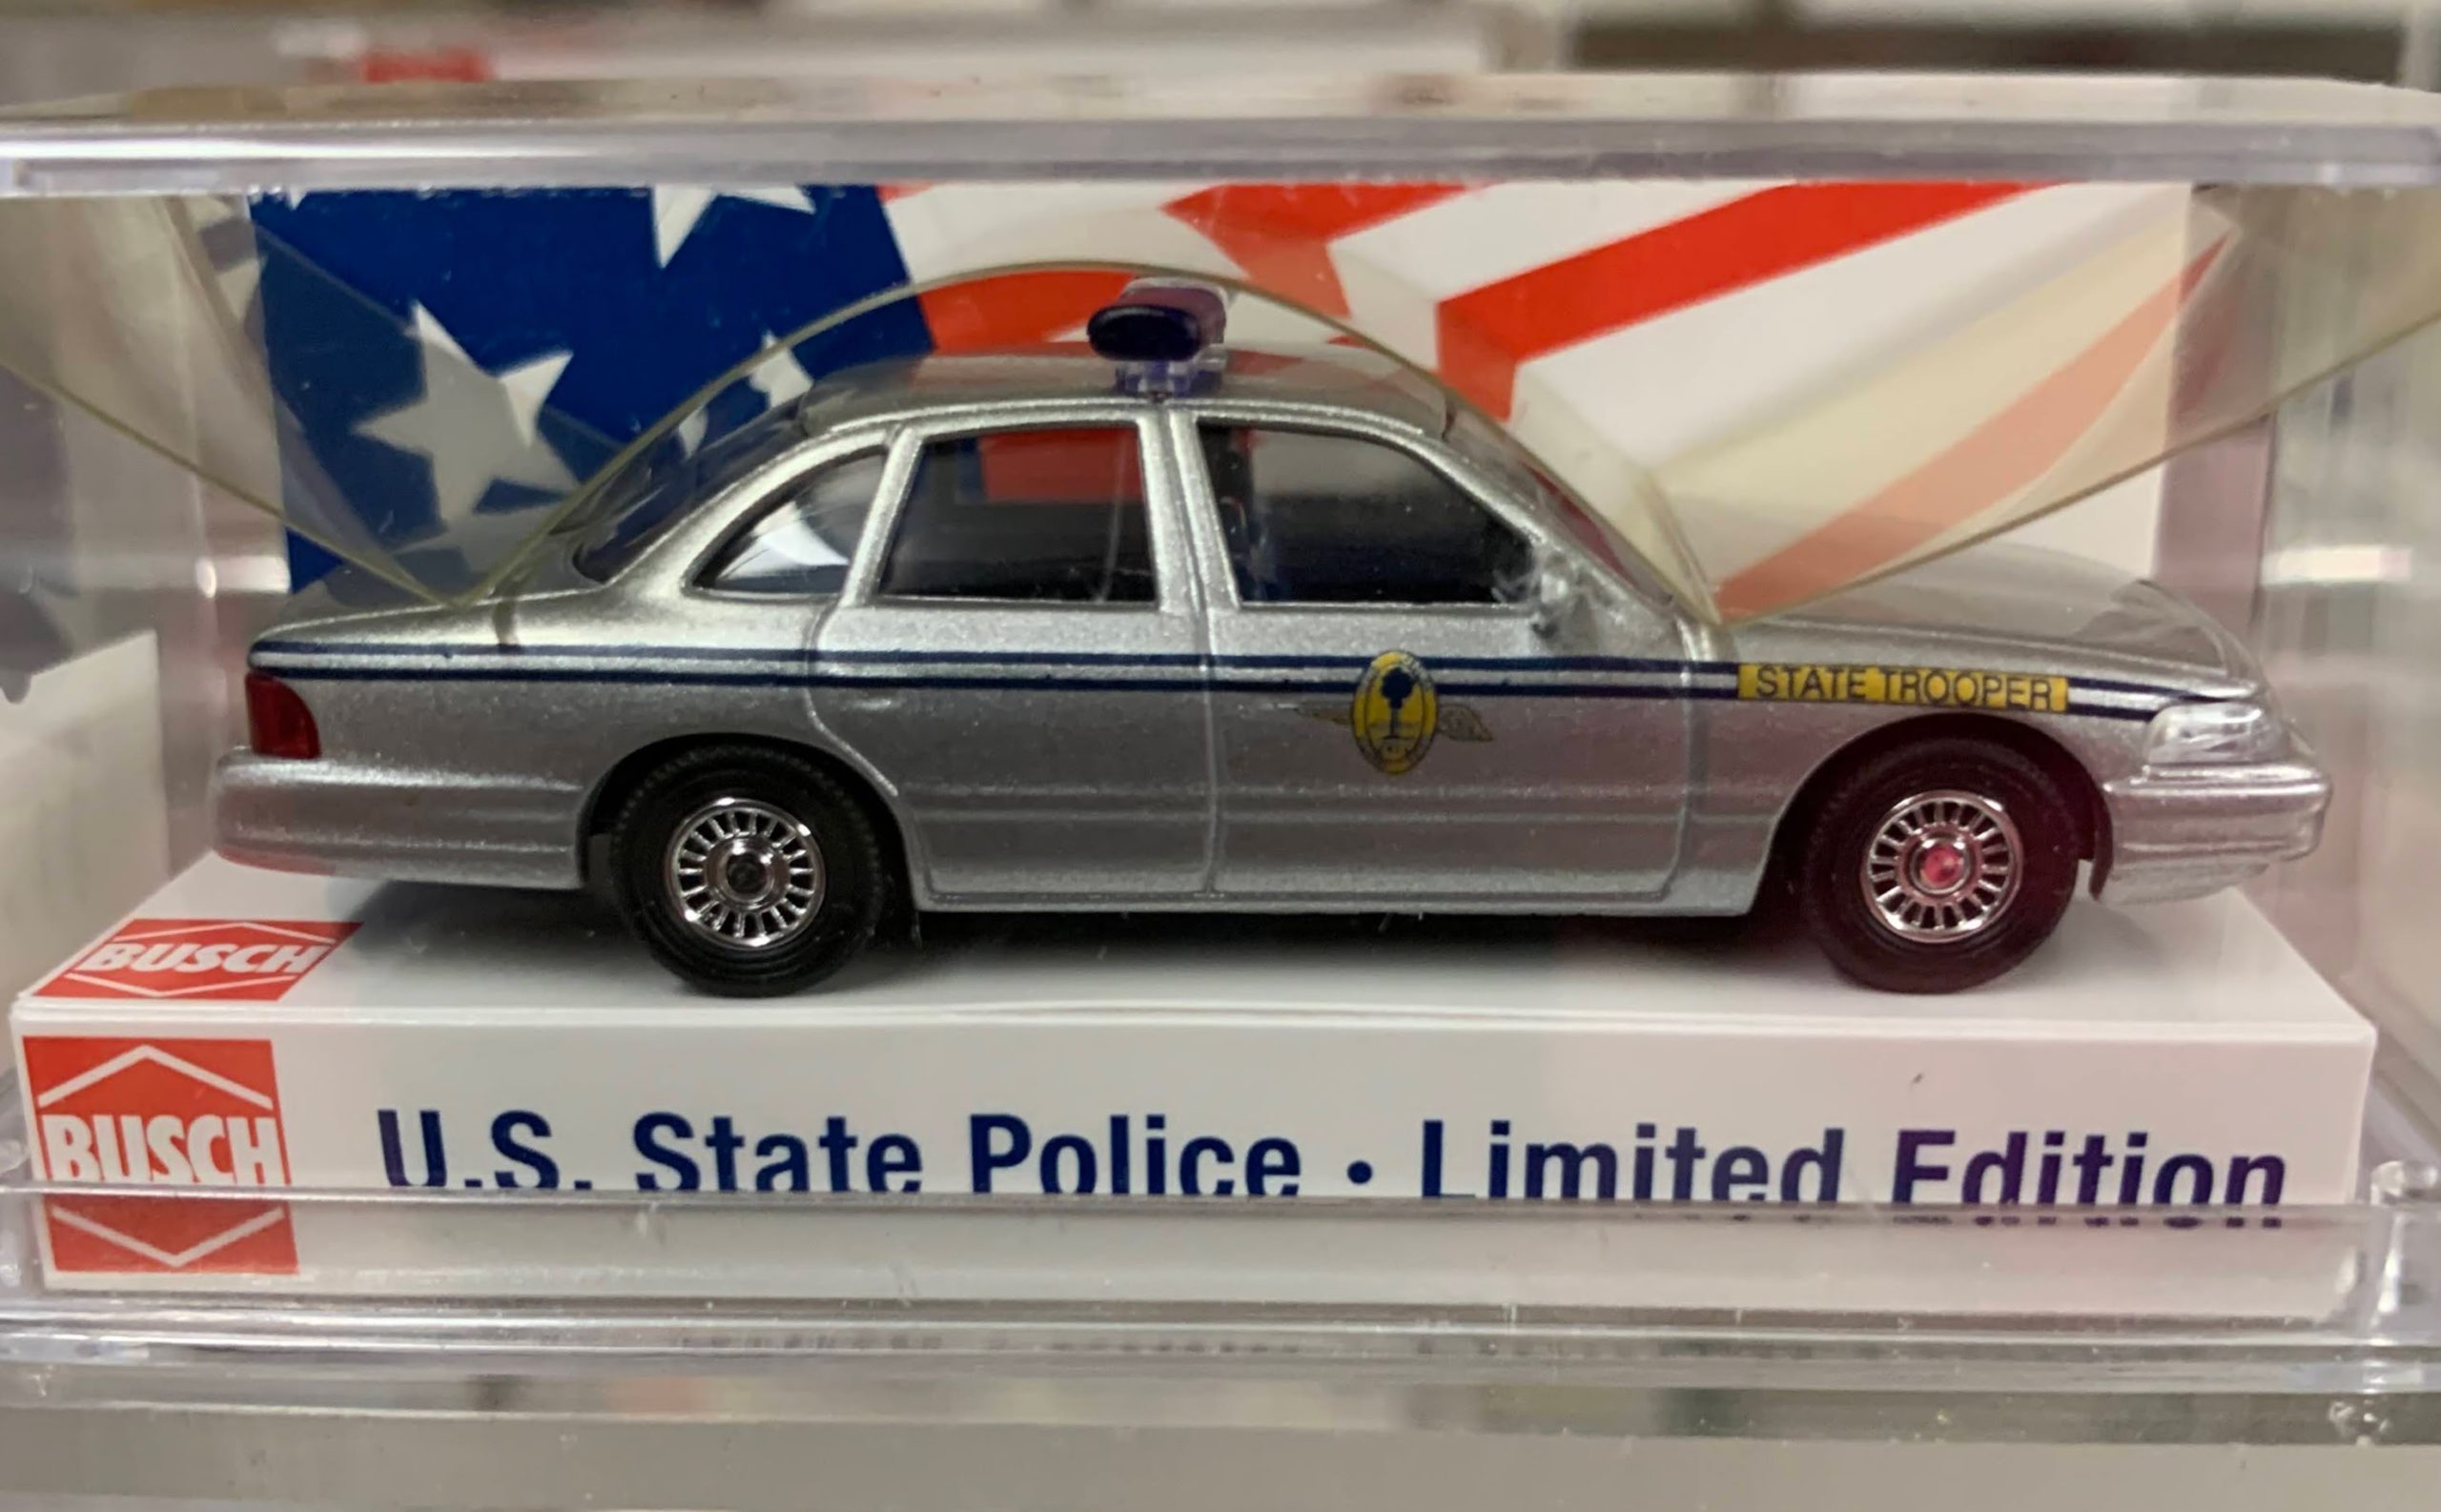 U.S. State Police Series - South Carolina